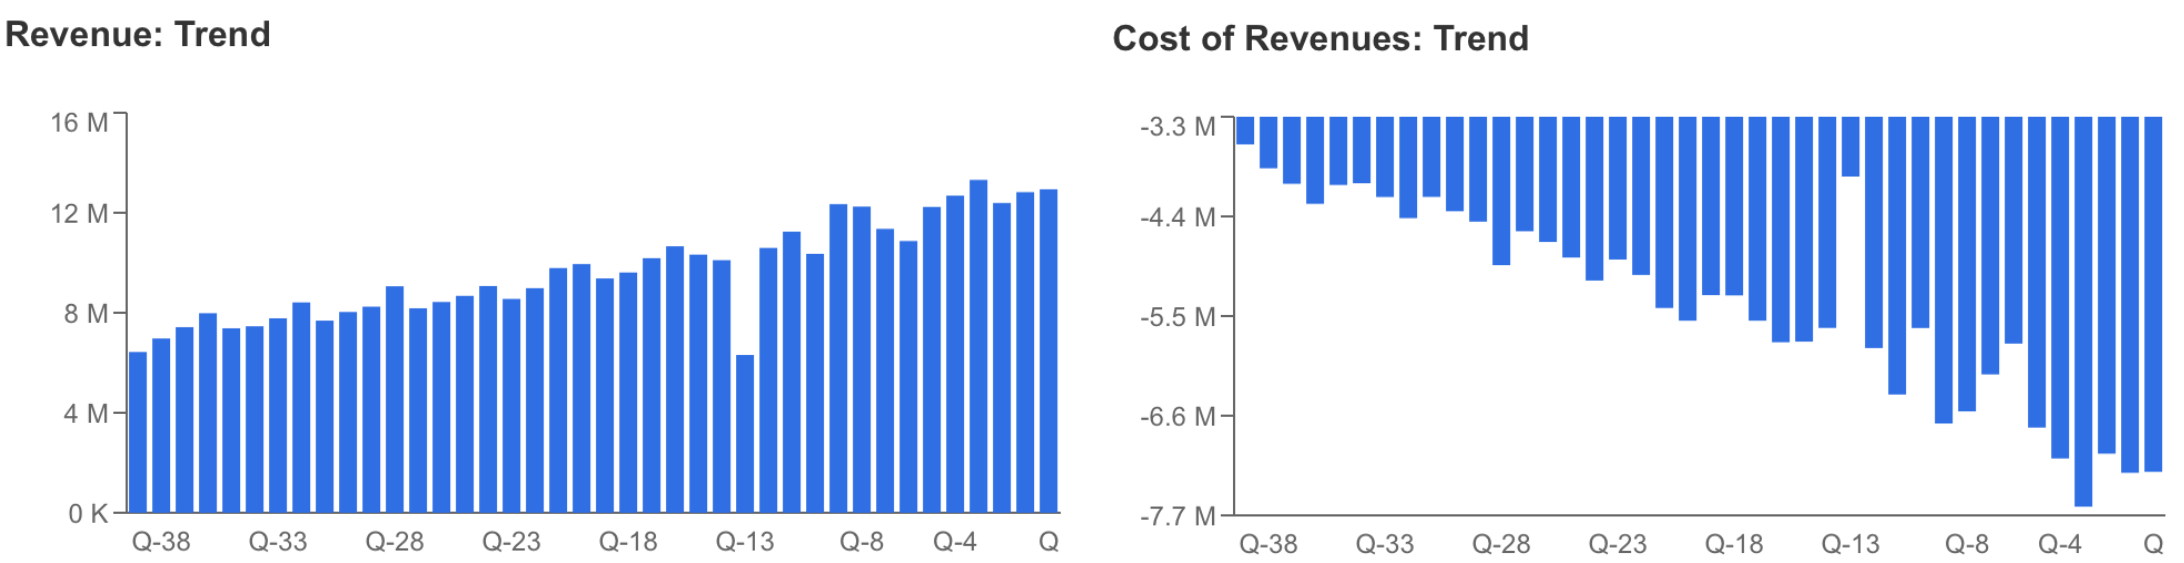 Nike Revenue Trend